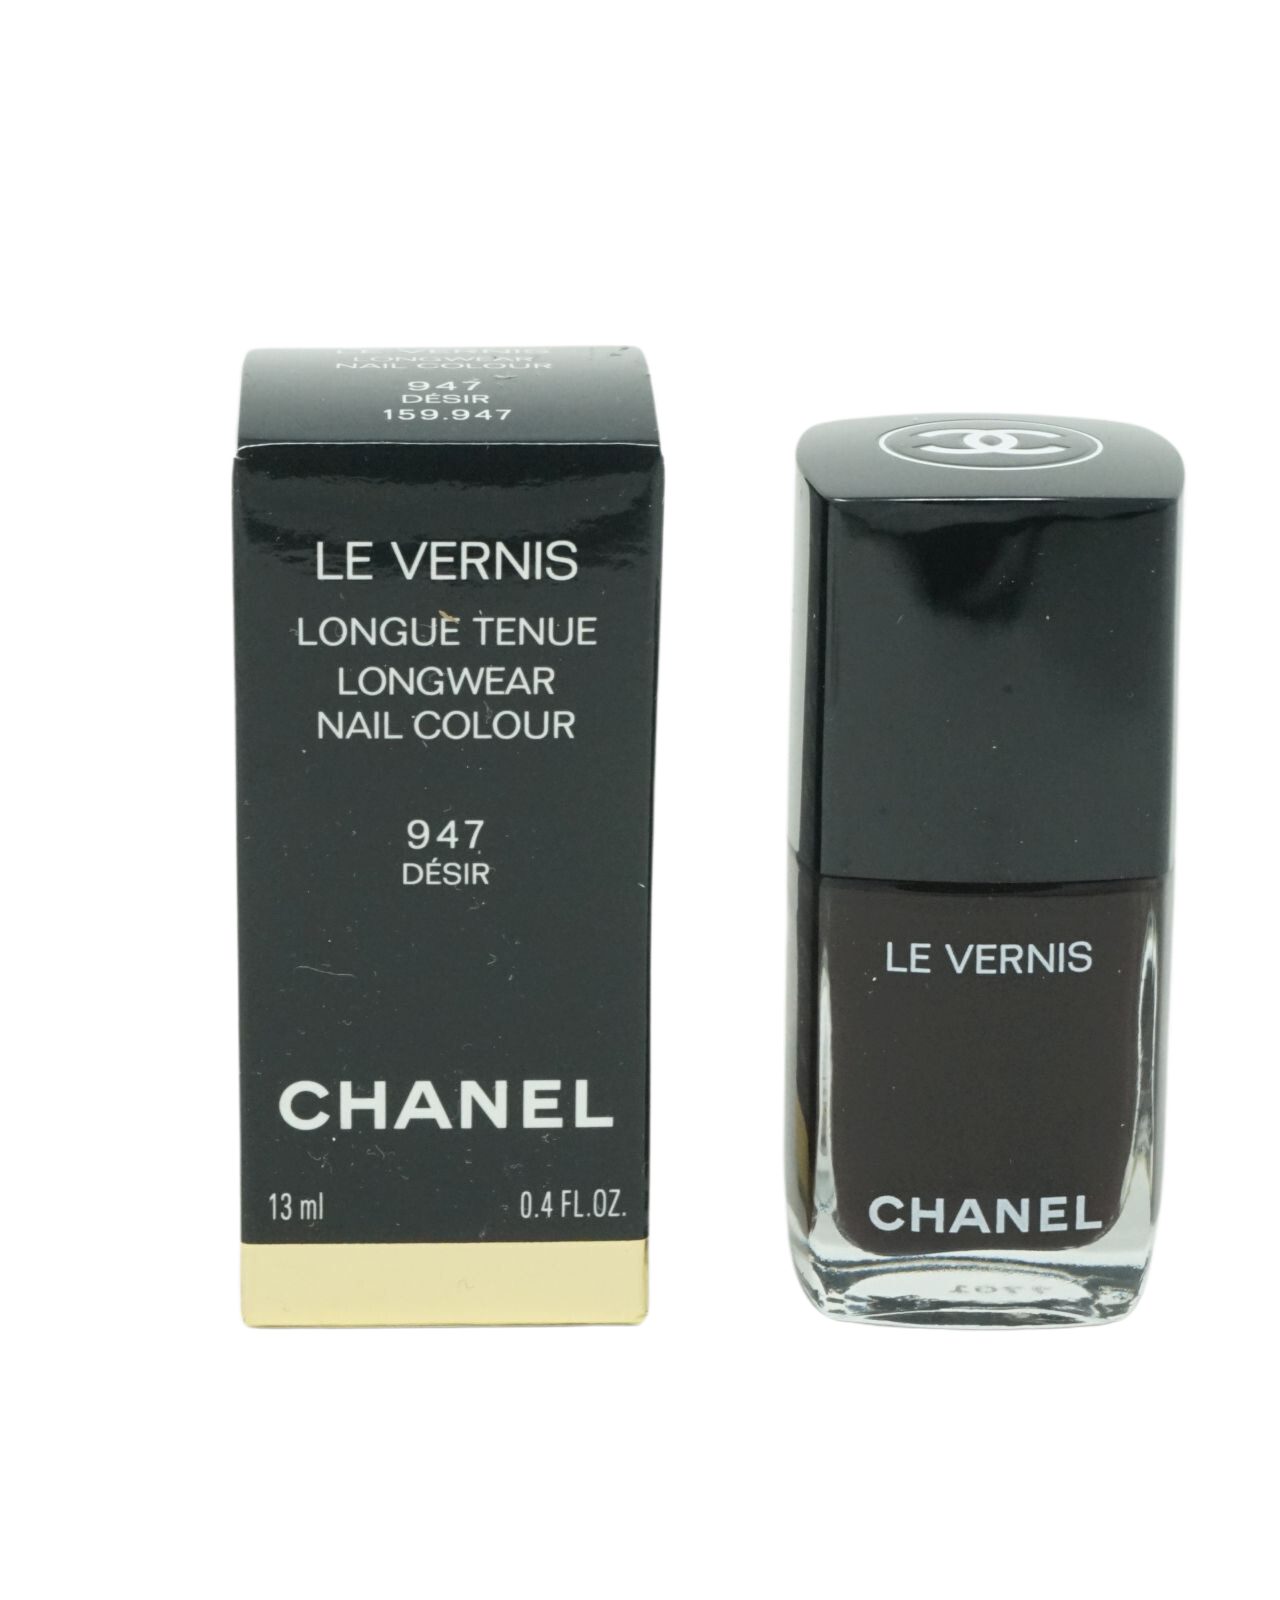 CHANEL Nagellack Desir Chanel 947 Nagellack Longwear 13ml Le Vernis